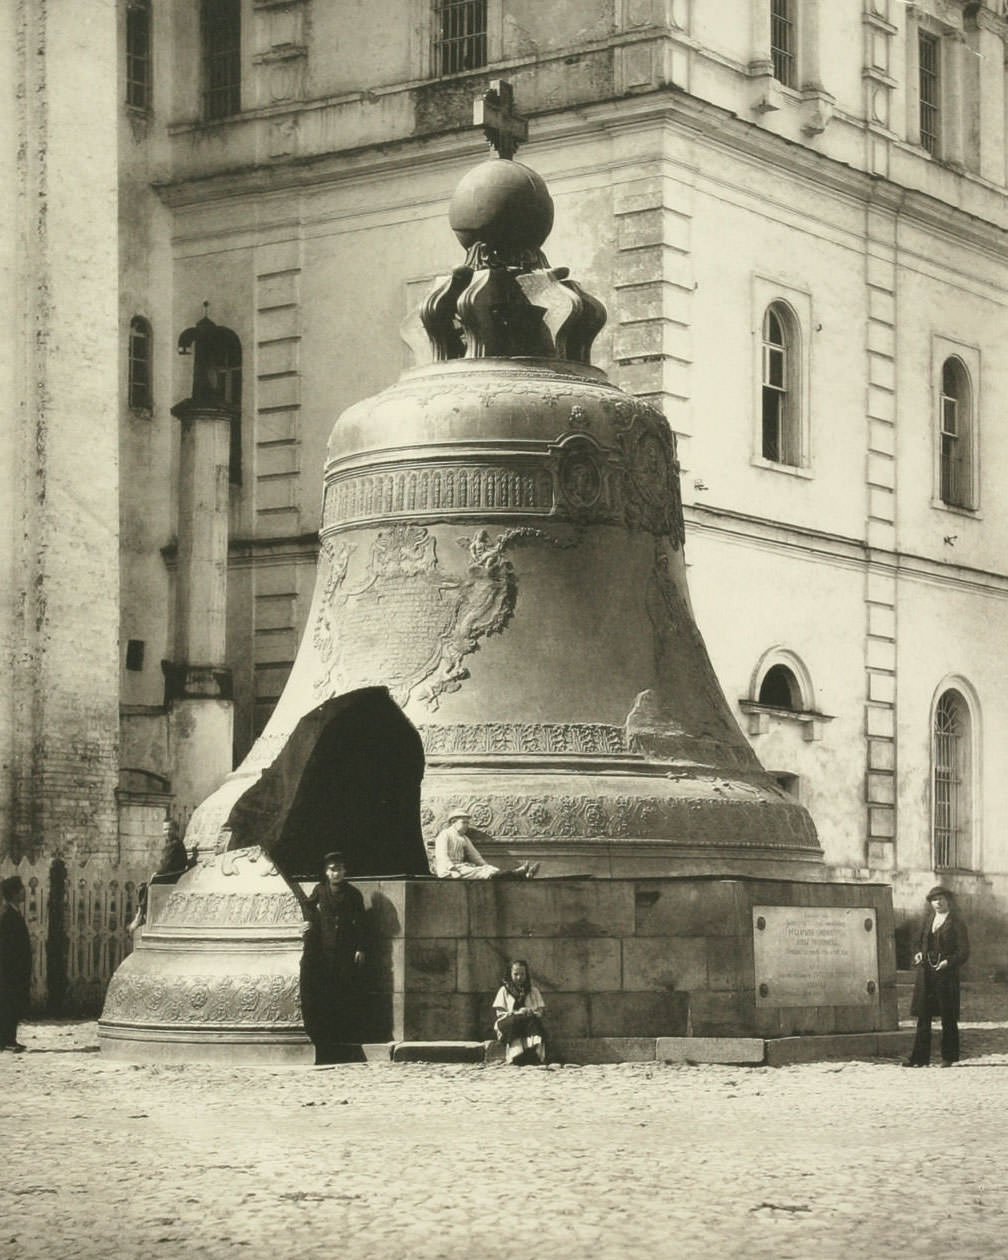 King Bell, 1880s